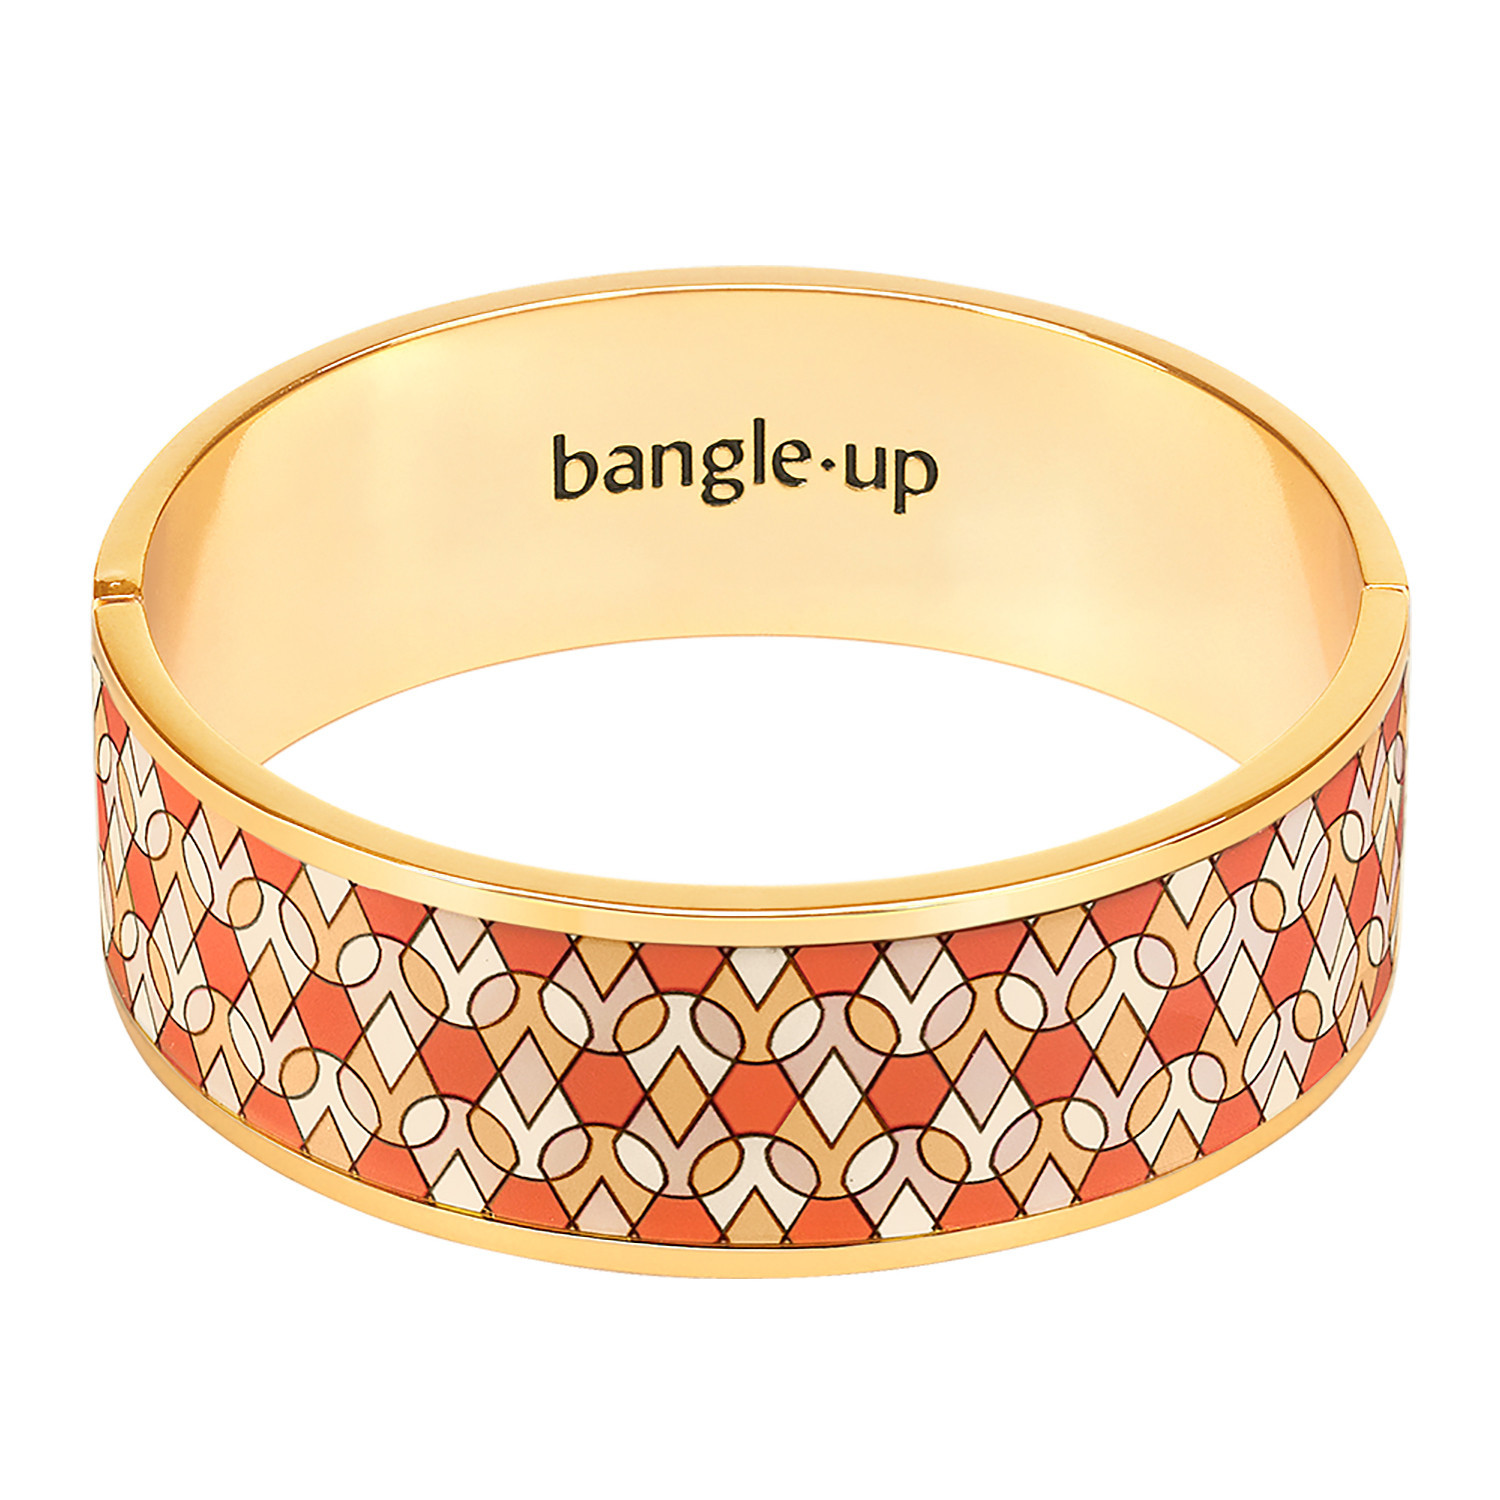 Bracelet jonc Bangle up Pinuply Fauve
Taille 2